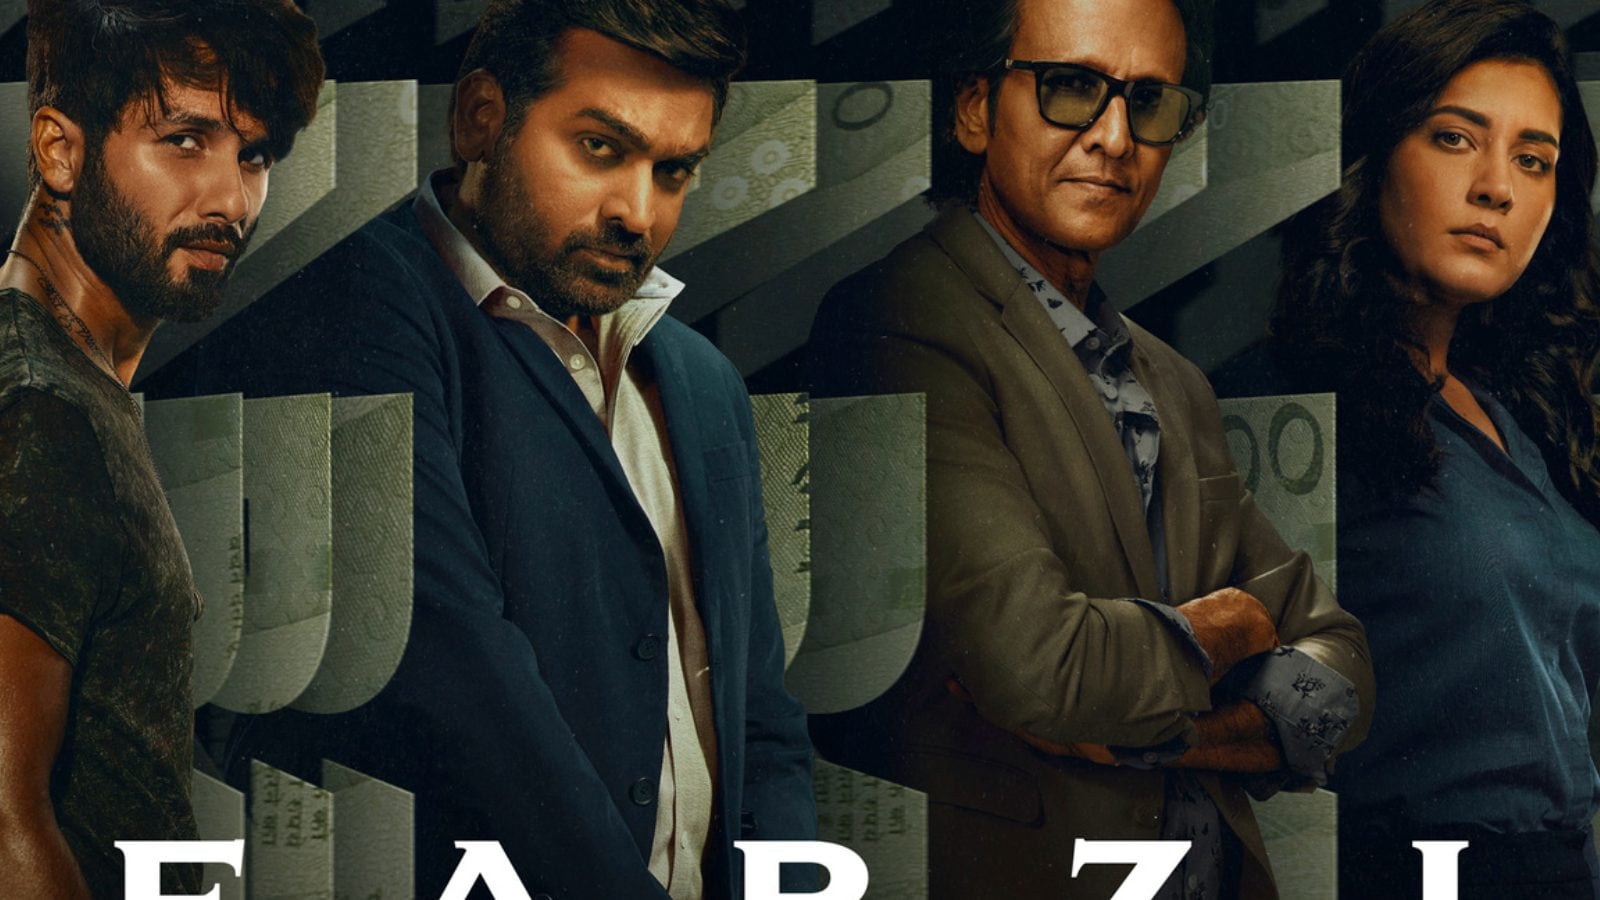 Shahid Kapoor spill the beans on Farzi season 2: Reports | India Forums